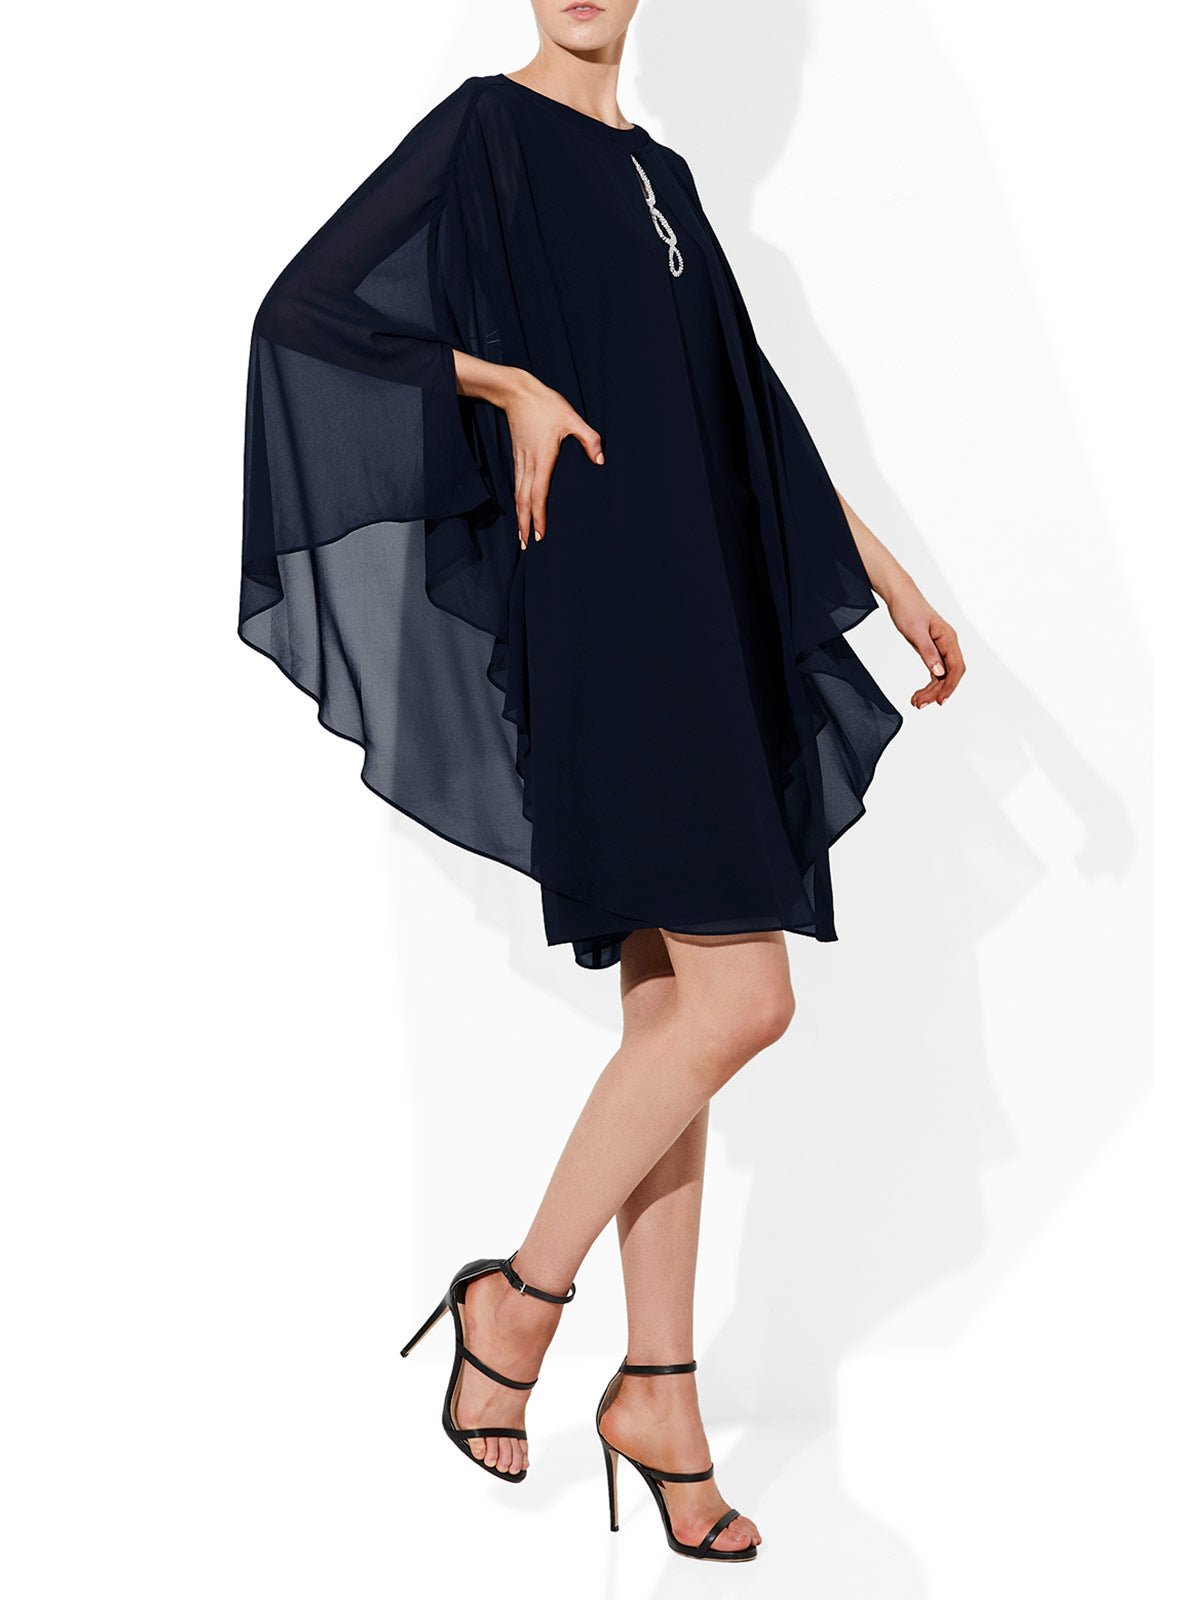 Lauren Navy Cocktail Dress by Montique